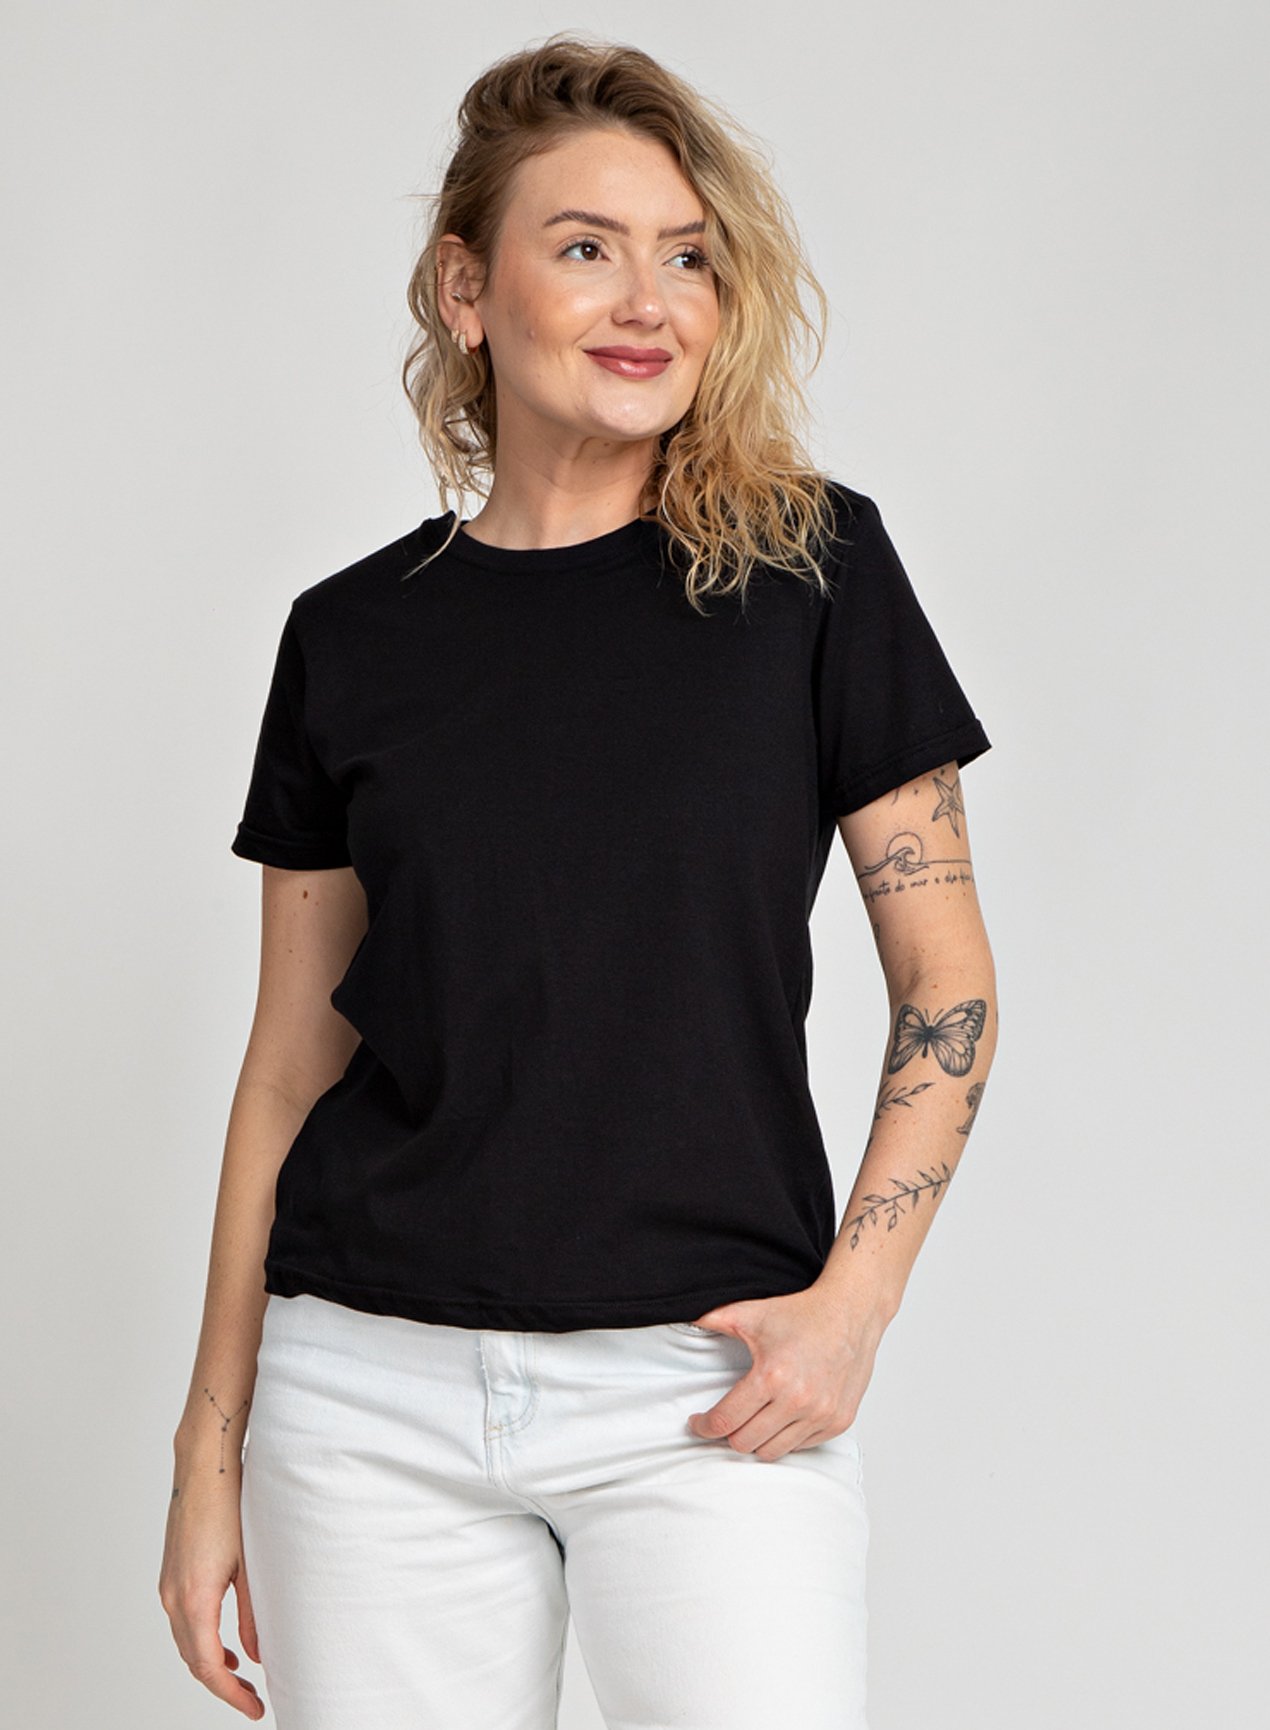 camiseta algodao preta feminina basica